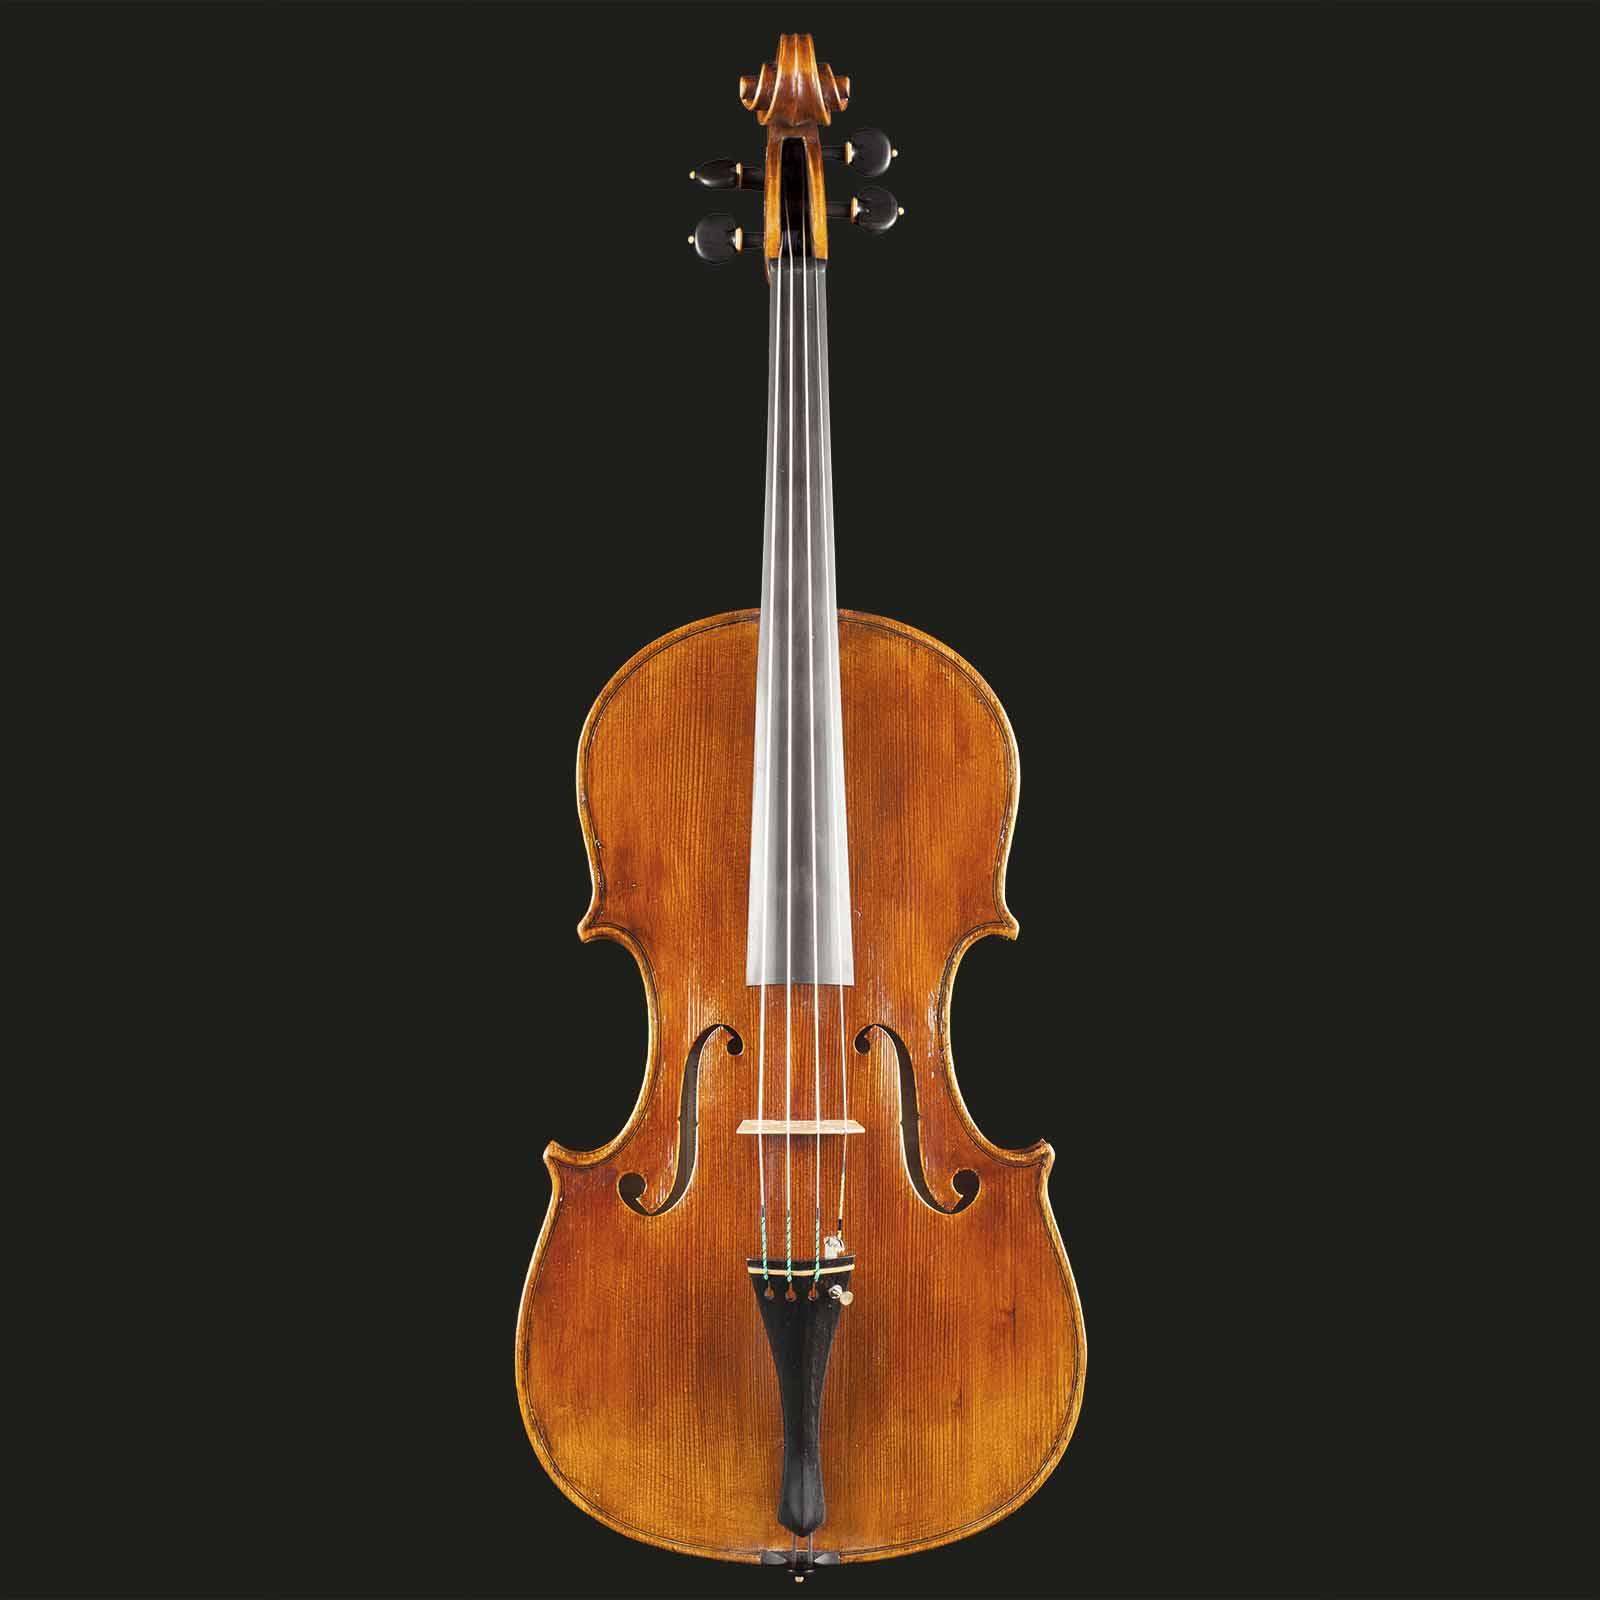 Antonio Stradivari Cremona 1672 “Virgo“ cm 42 - Image 1